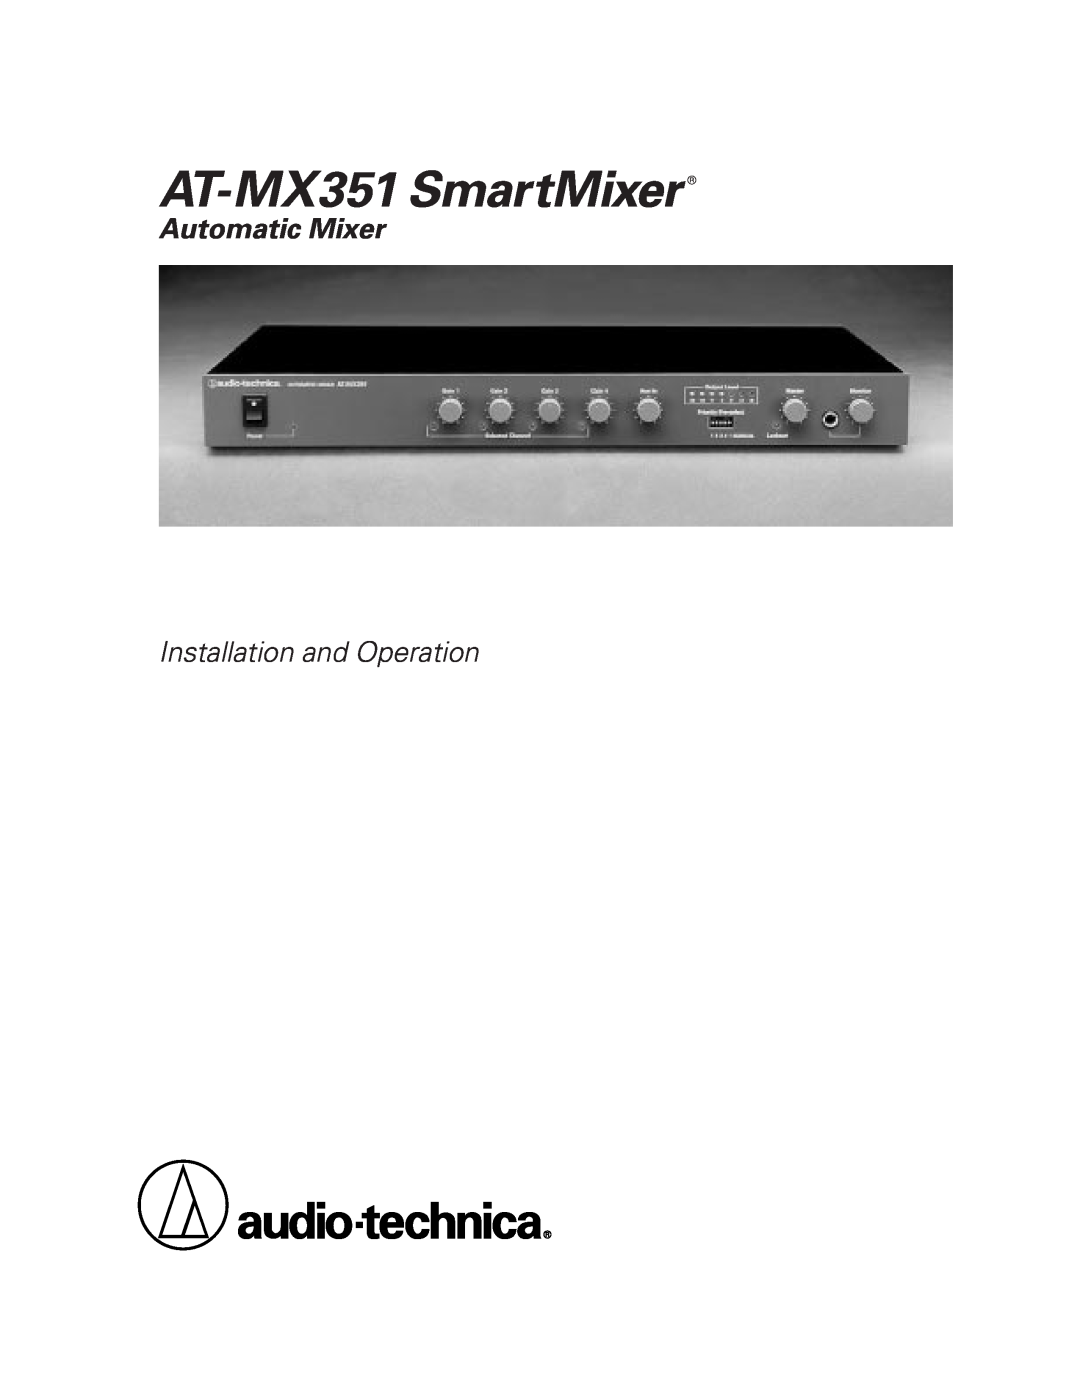 Audio-Technica manual AT-MX351 SmartMixer, Automatic Mixer, Installation and Operation 